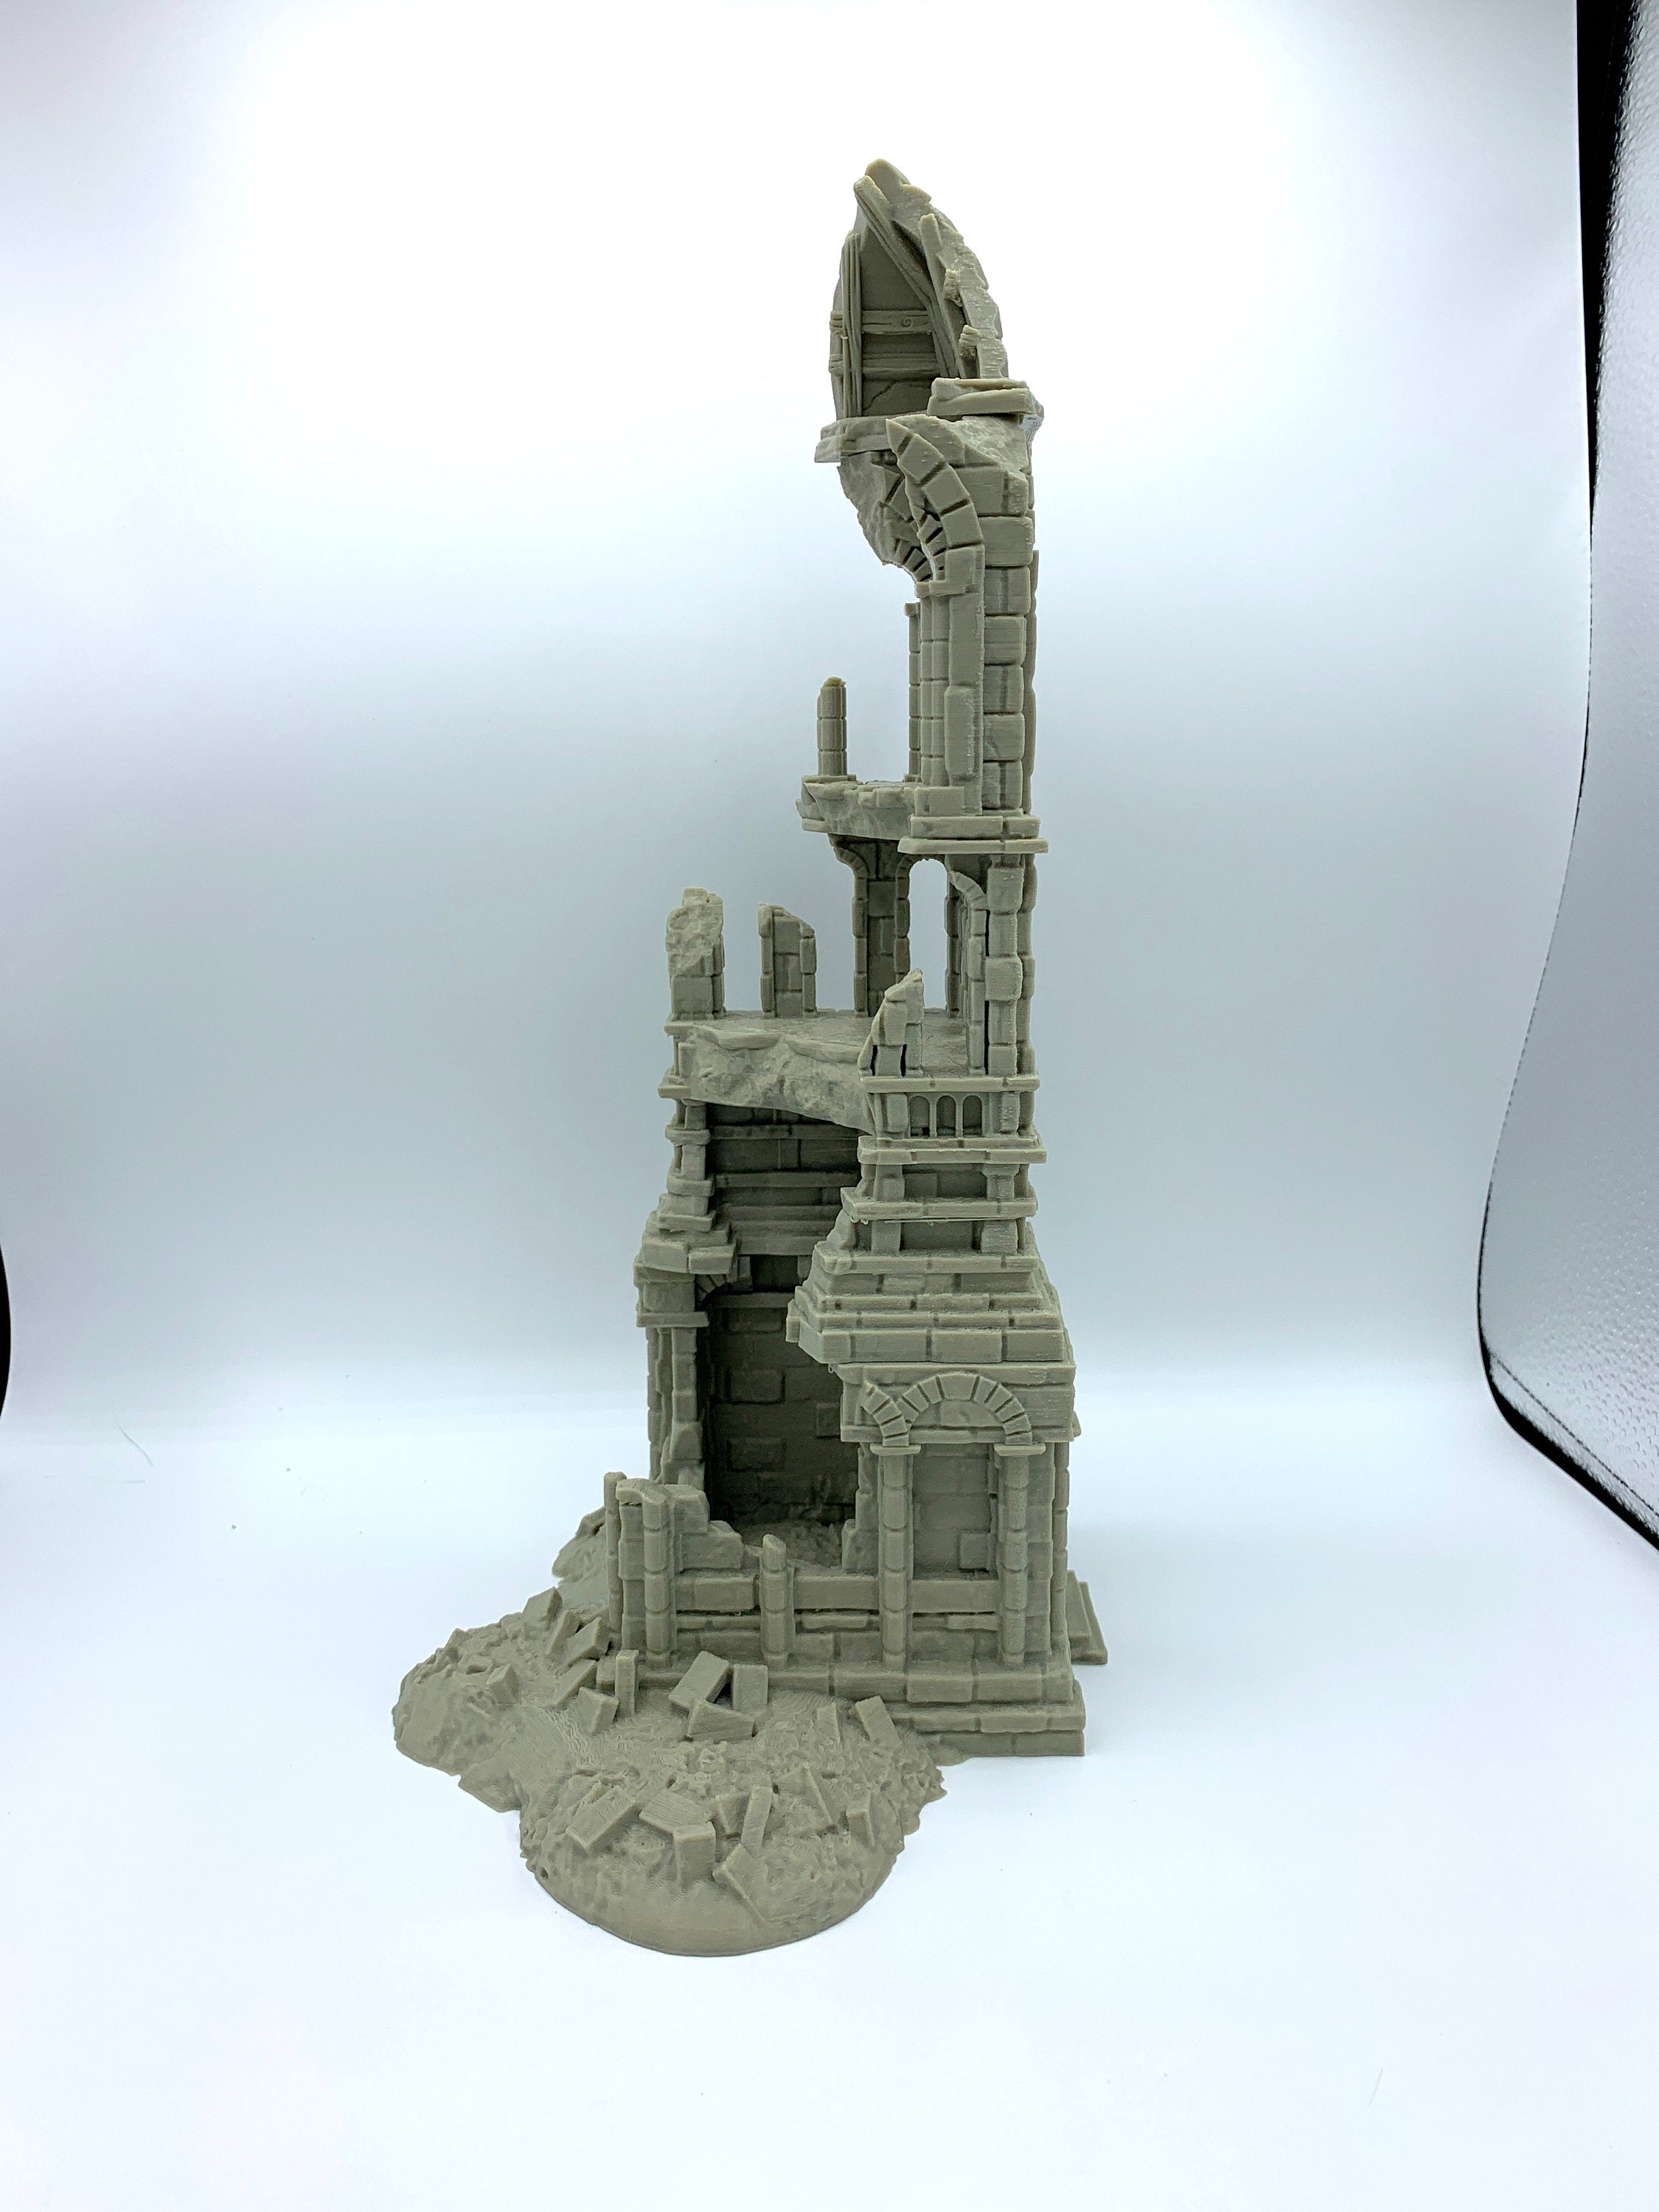 Arkenfel Ruined Tower 1 / Dark Realms Terrain / RPG and Wargame 3d Printed Tabletop Terrain / Licensed Printer